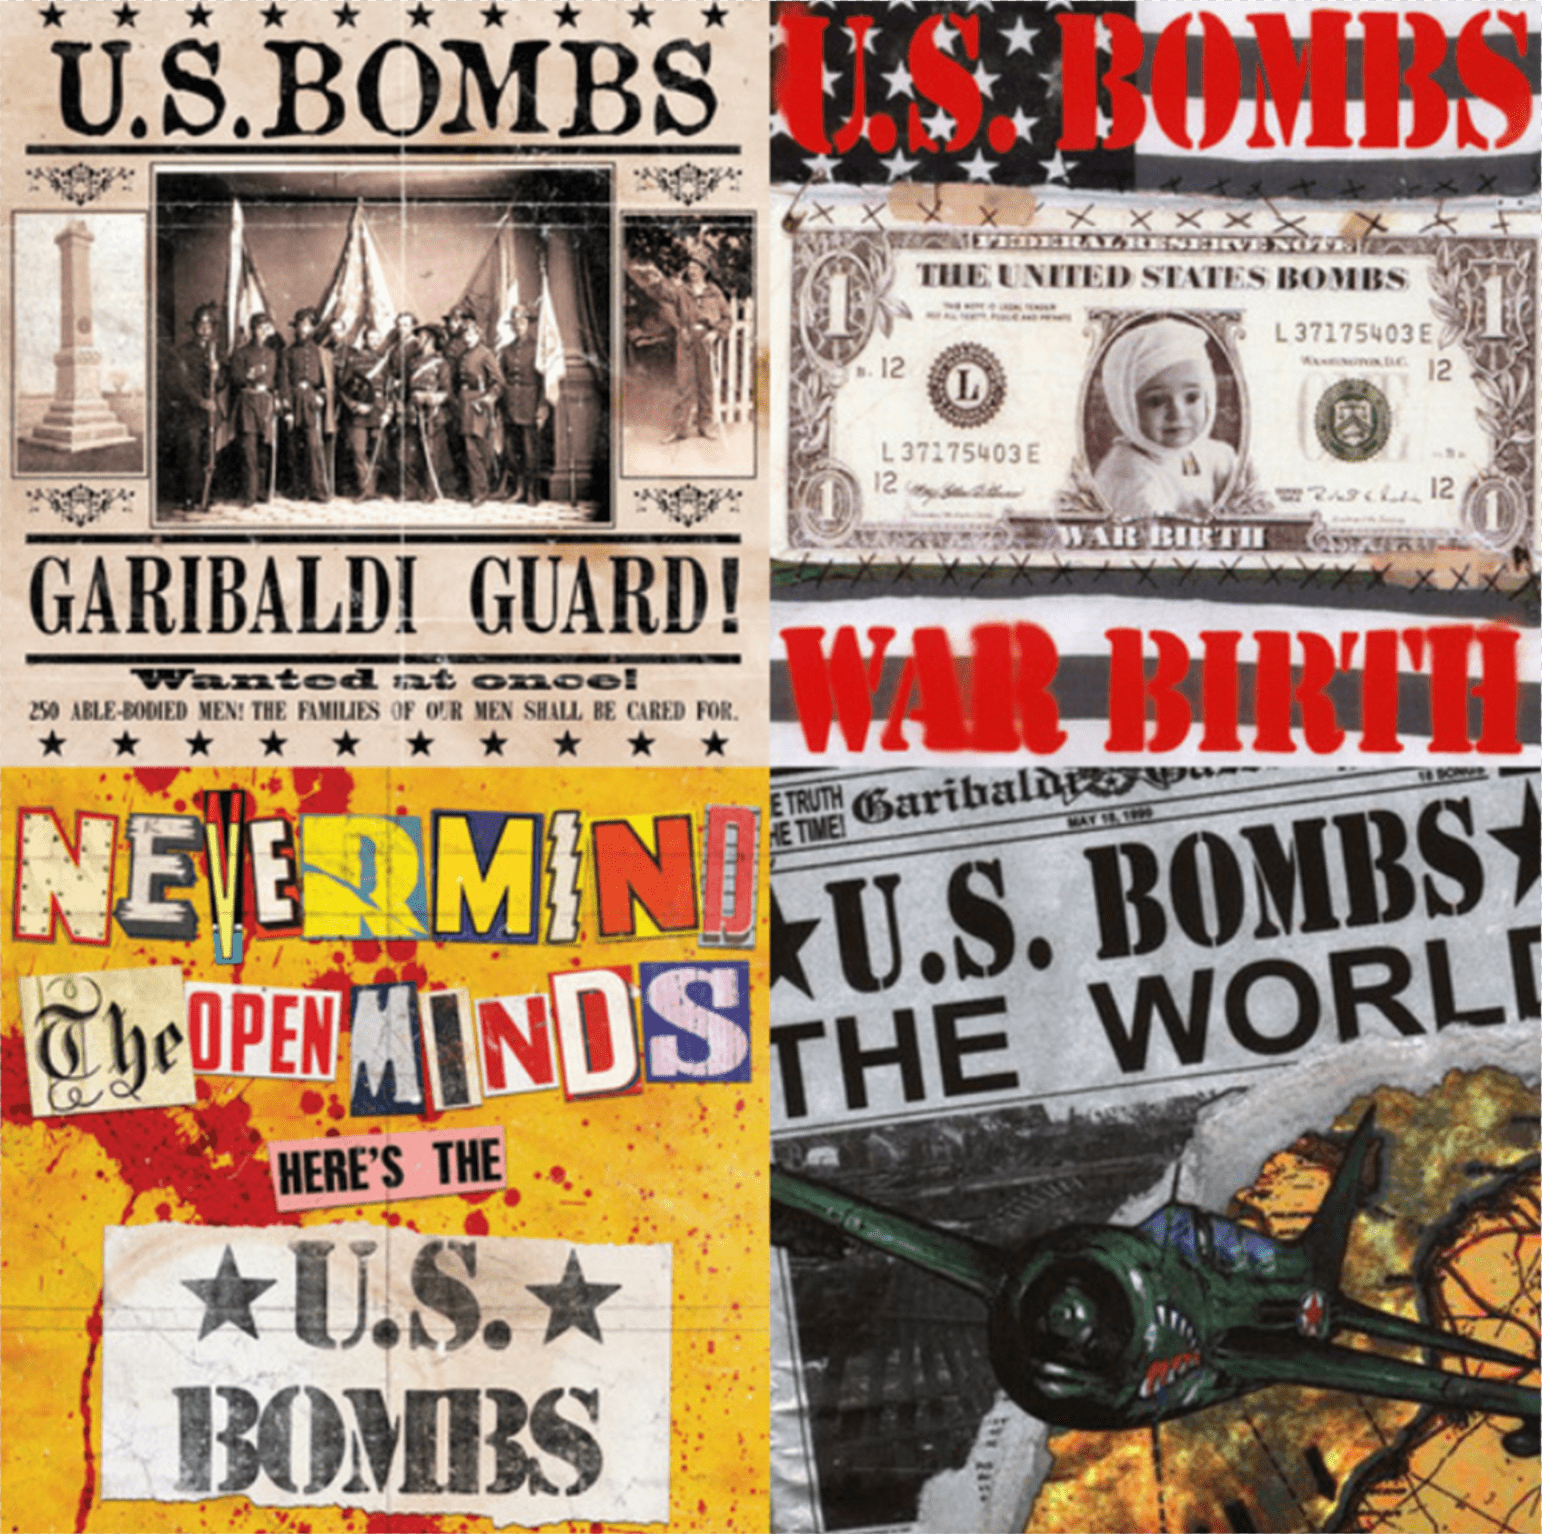 U.S. BOMBS - commonyouthbrand